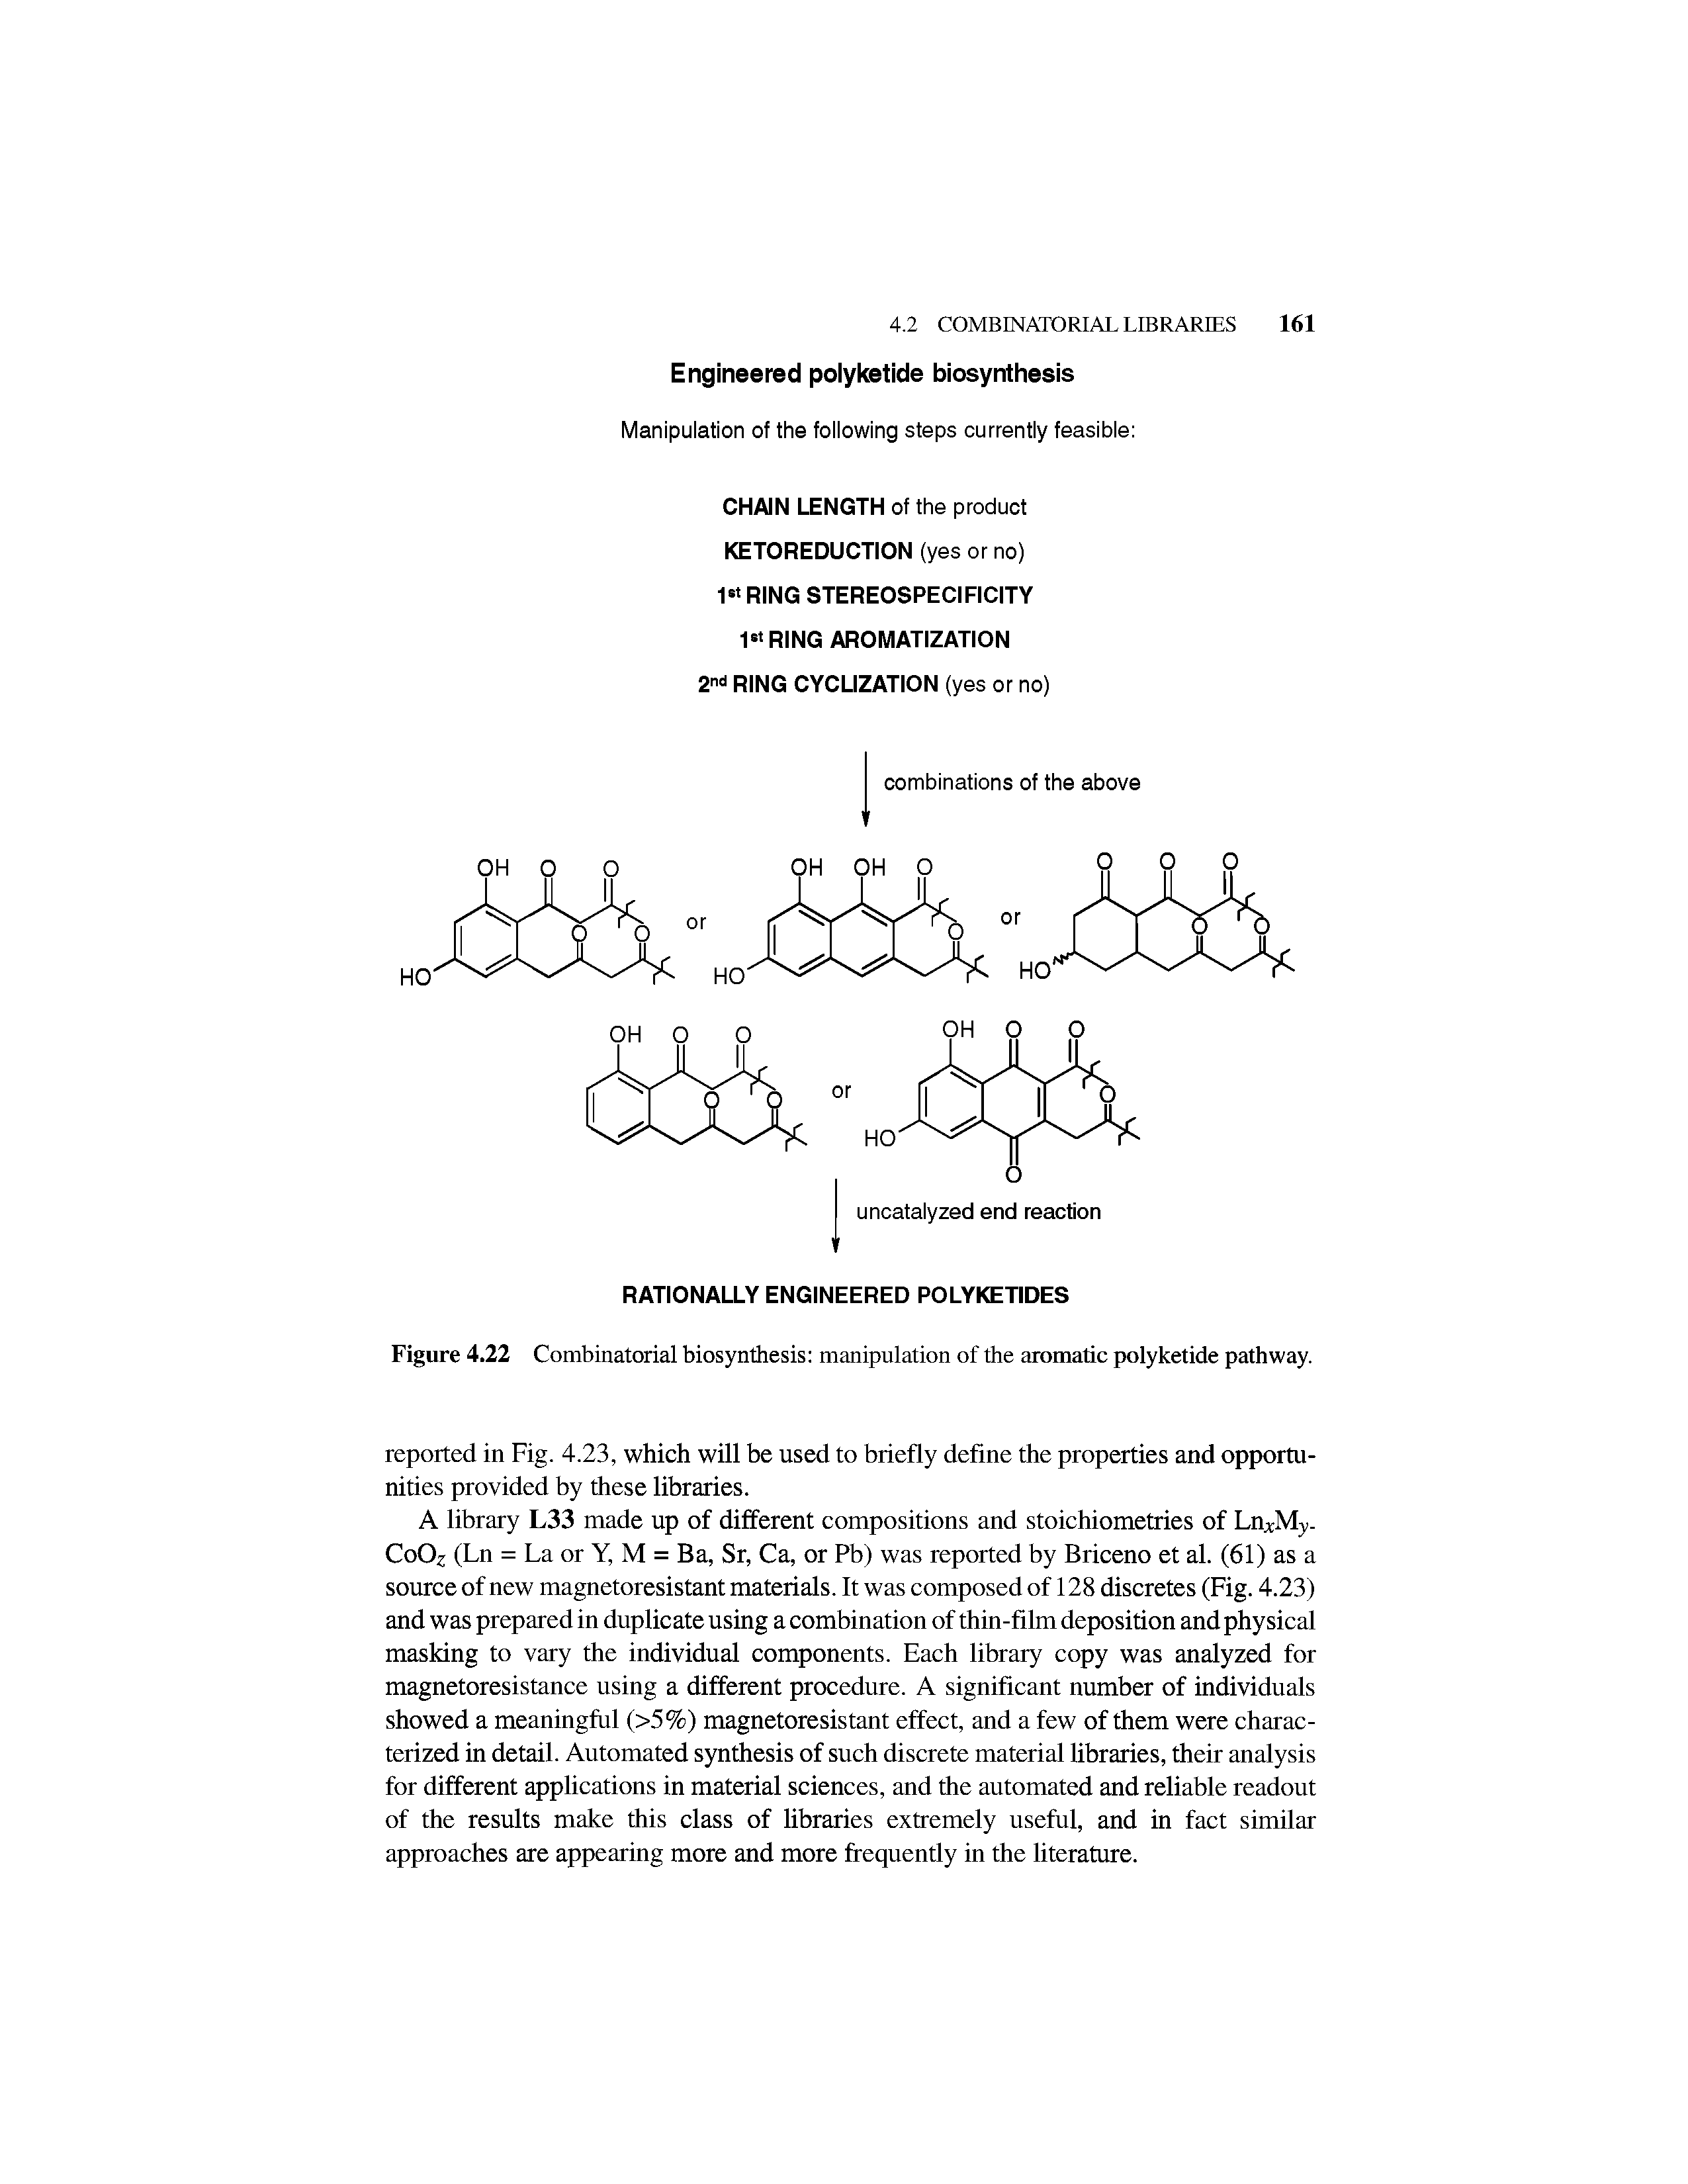 Figure 4.22 Combinatorial biosynthesis manipulation of the aromatic polyketide pathway.